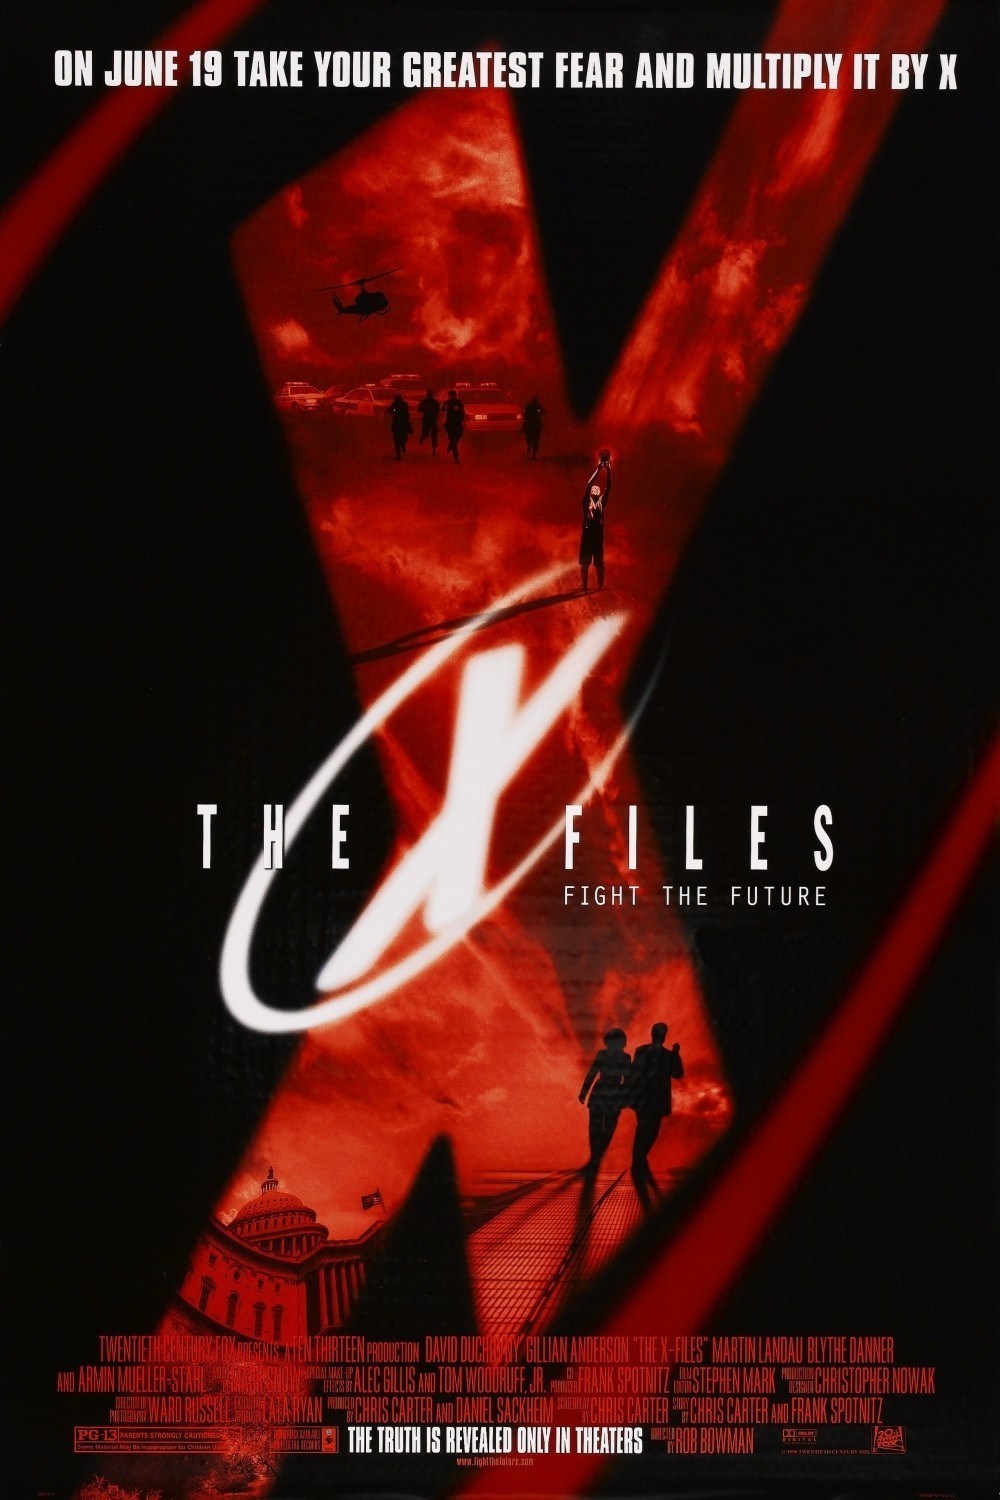 The X-Files Fight the Future (1998) ดิเอ็กซ์ไฟล์ ฝ่าวิกฤตสู้กับอนาคต David Duchovny